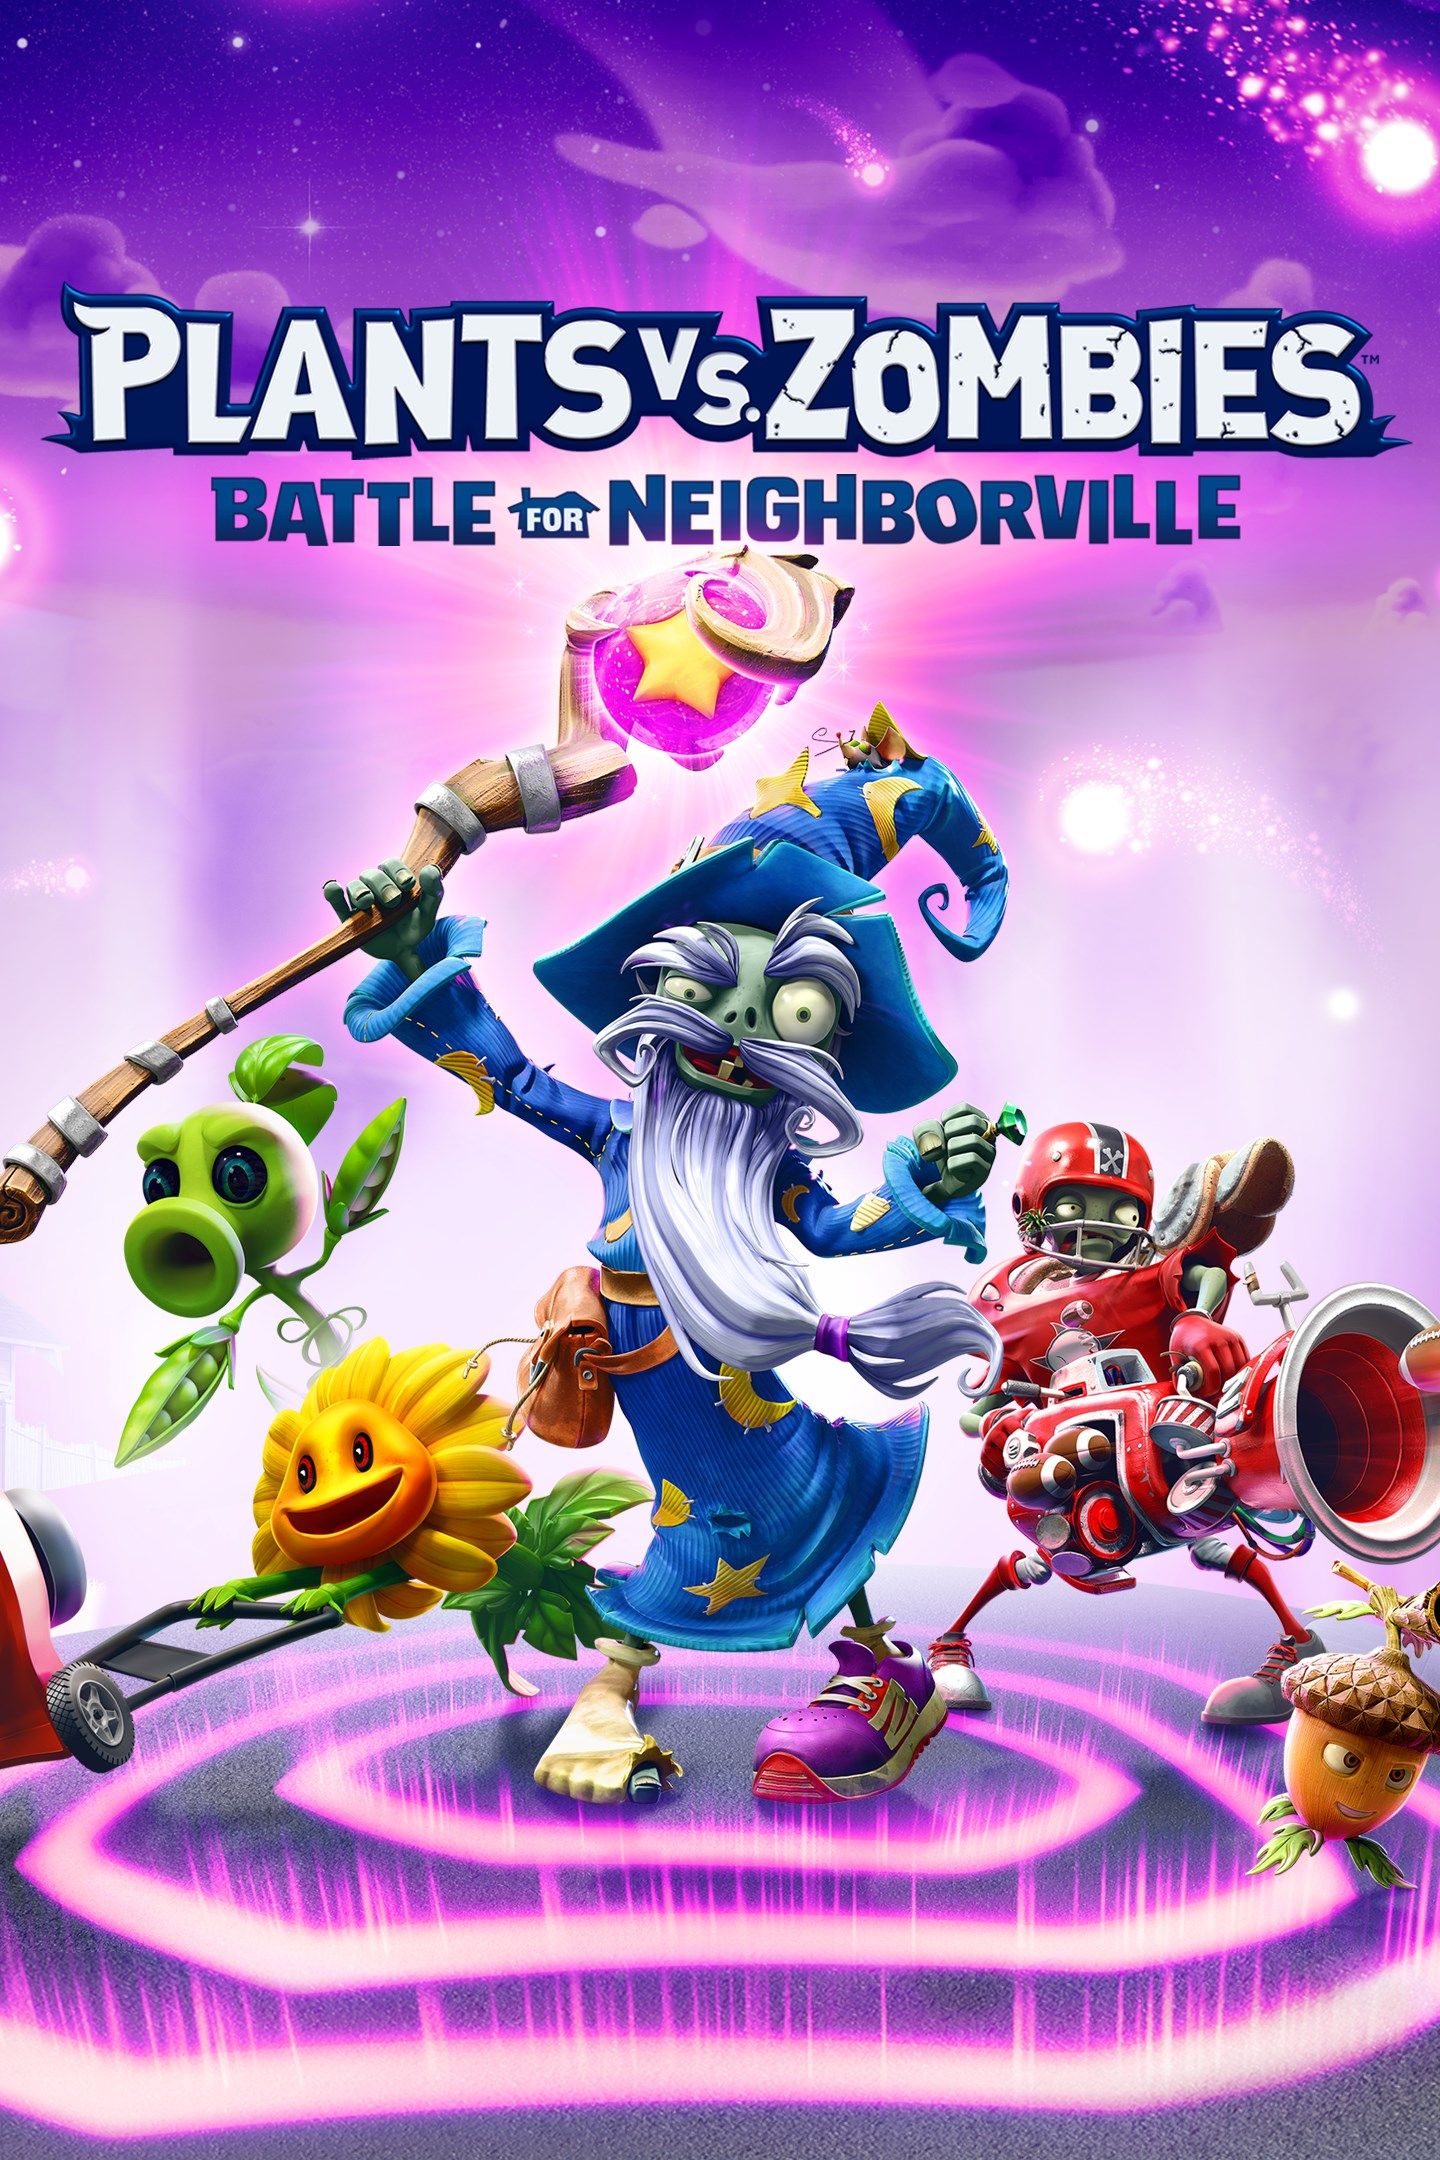 Файлы растения против зомби. Hfcntybz ghjnbd PJV,B ,bndf PF YTQ,thdbkm. Plants vs. Zombies™: битва за нейборвиль. Растения против зомби битва за нейборвиль. Plants vs. Zombies™: битва за нейборвиль издание Deluxe.